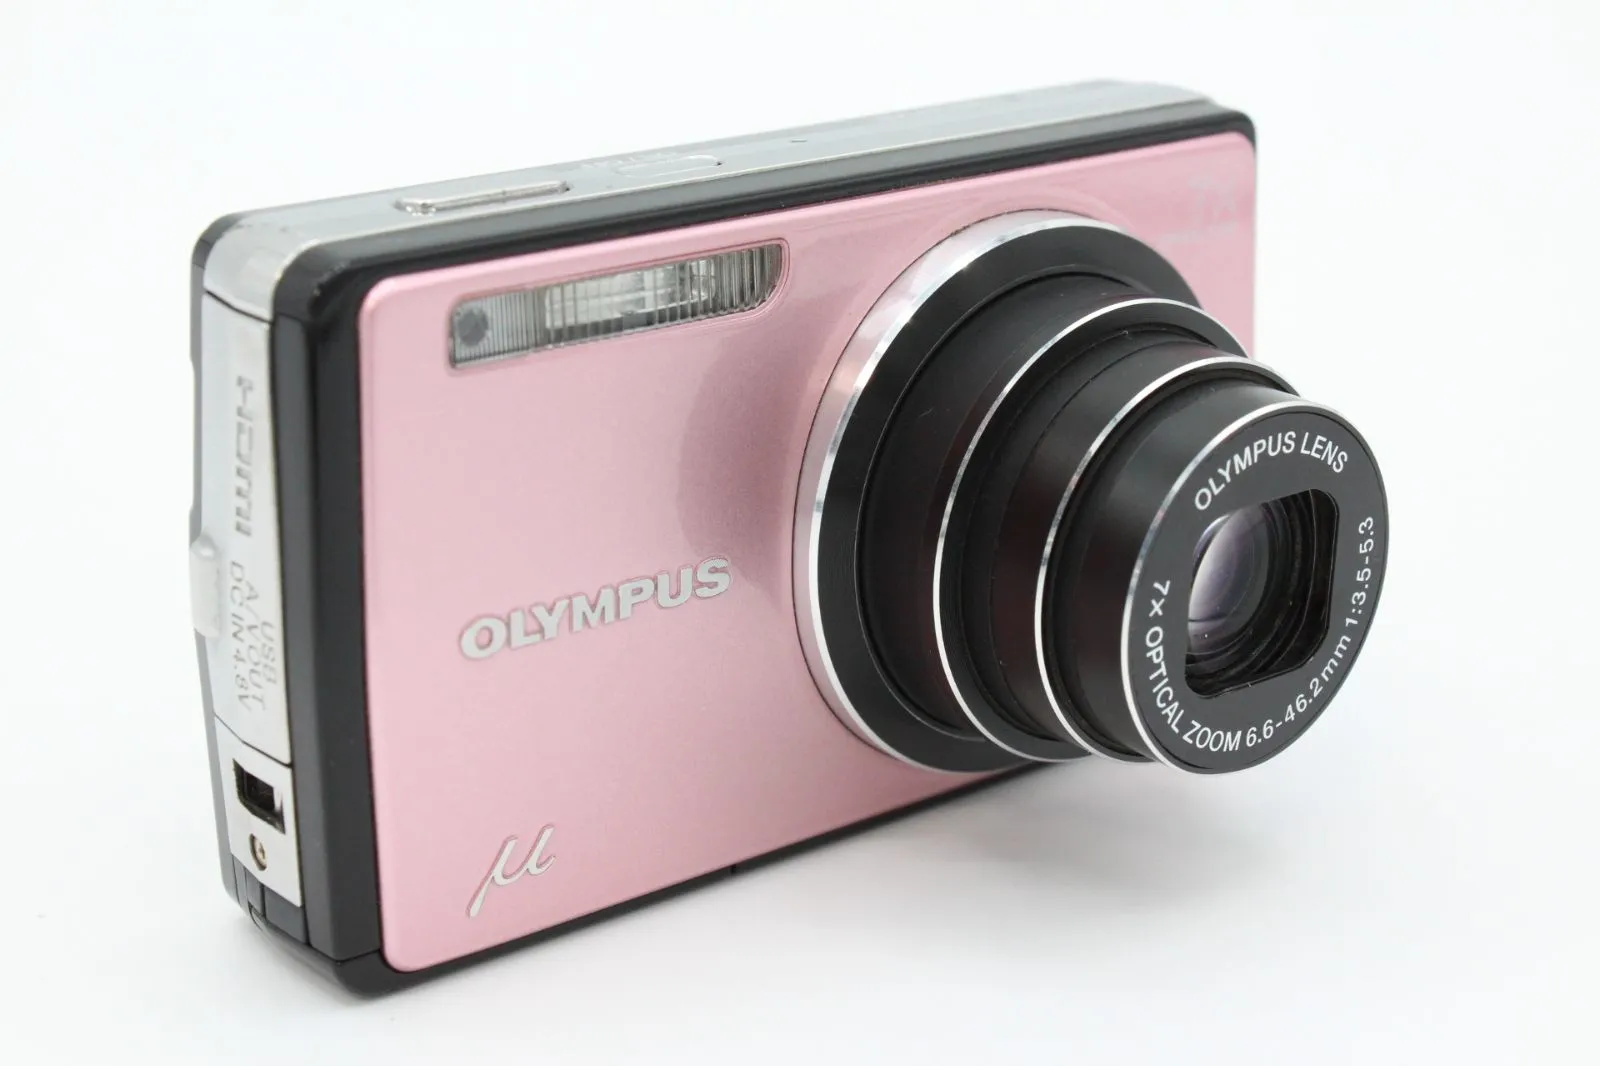 OLYMPUS ミュー7000 デジカメ - デジタルカメラ